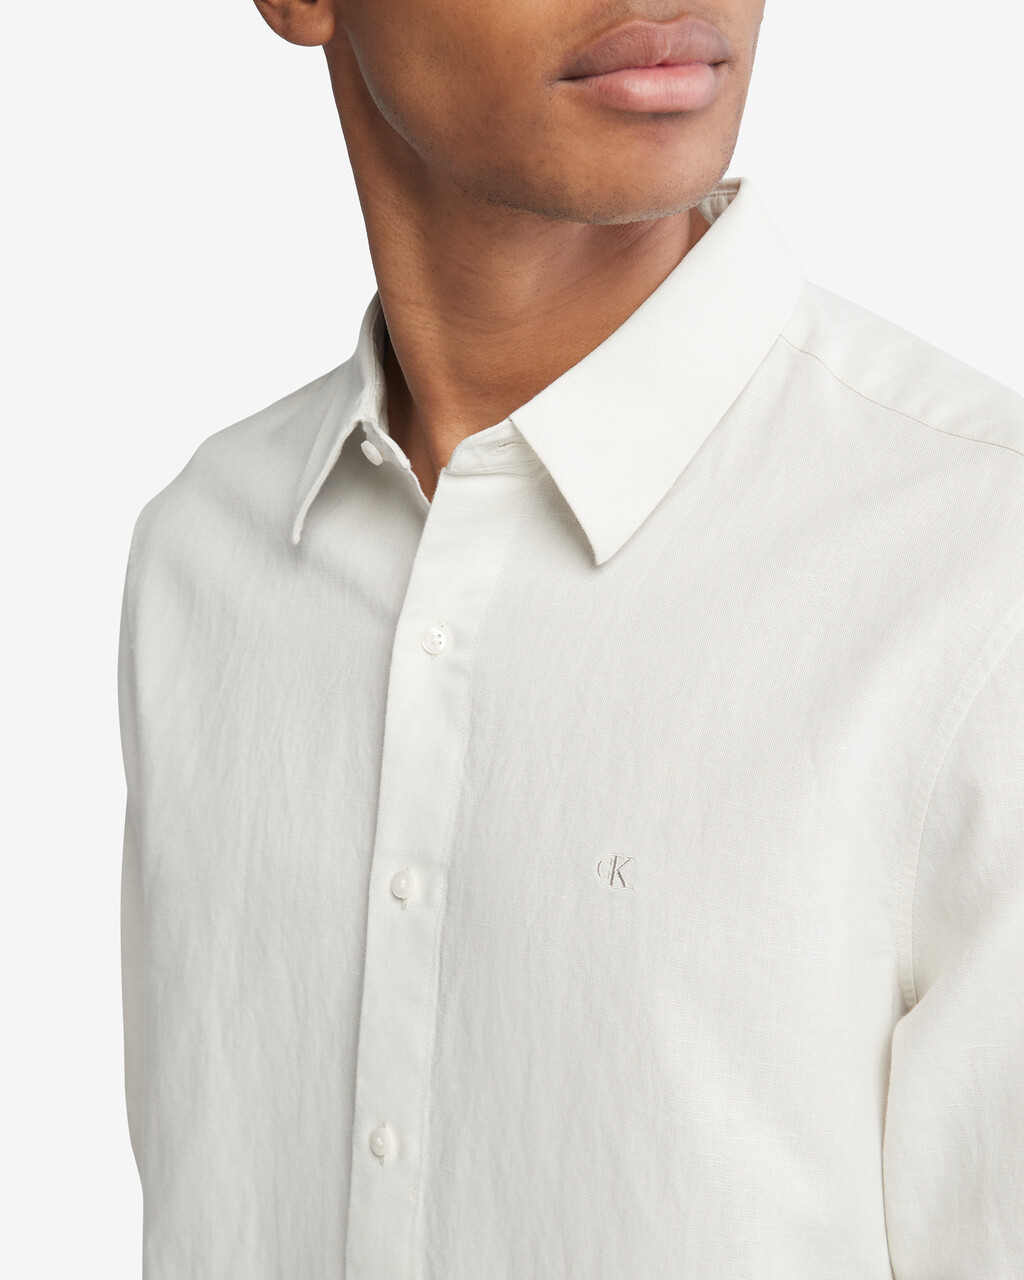 Classic Linen Shirt, White Onyx, hi-res